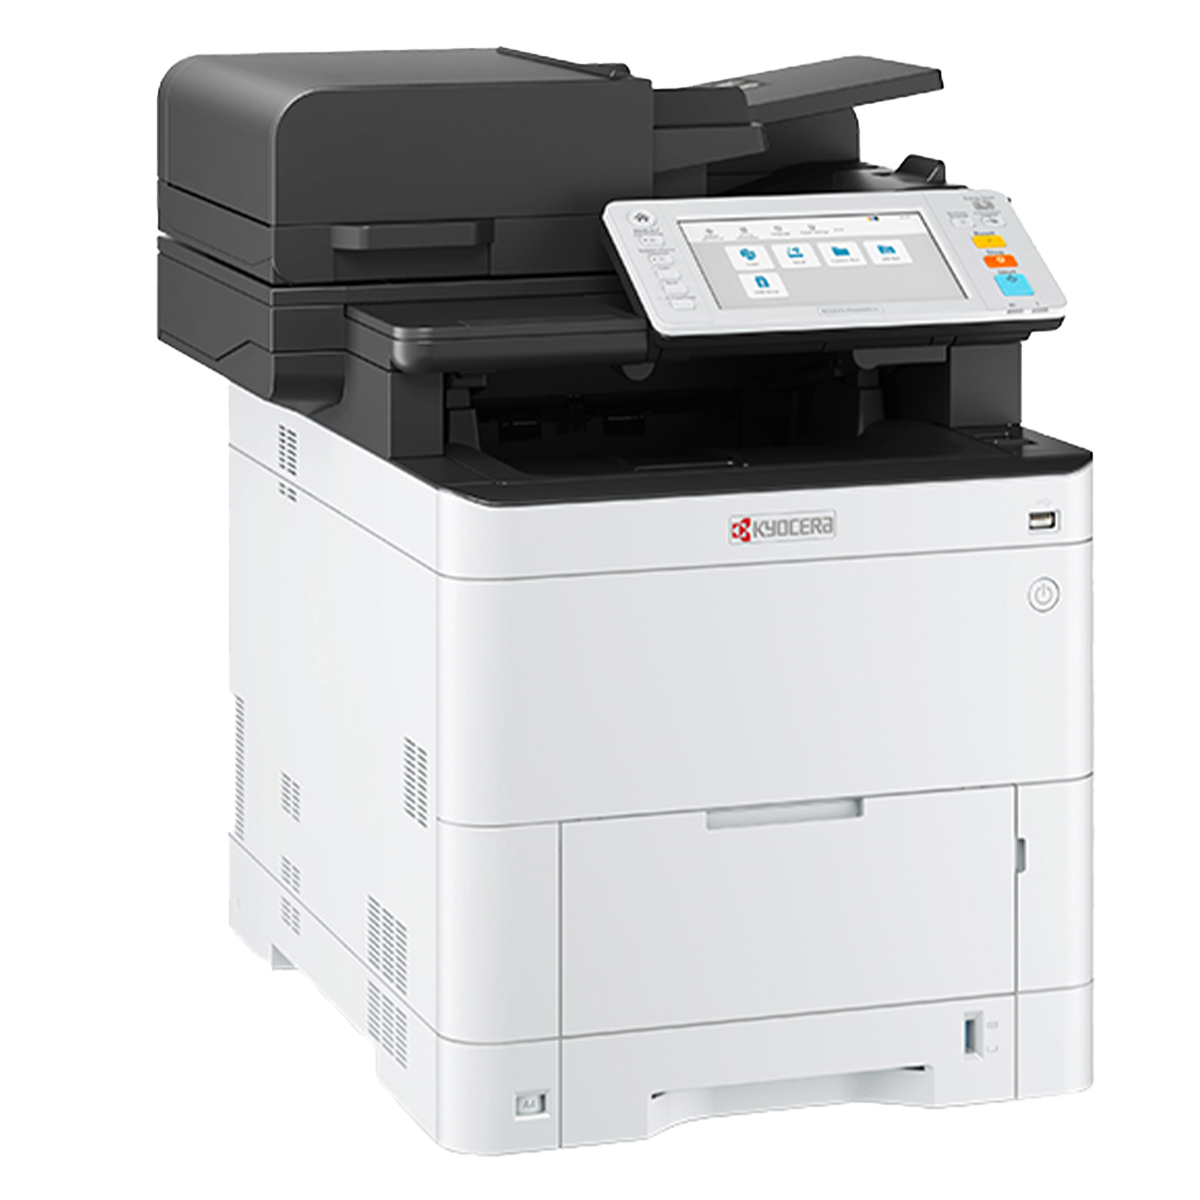 Imprimanta Multifunctionala Kyocera MA3500cix Laser color A4, 35 ppm, duplex, Touch Panel, Dual Scan ADF 100 coli, USB, retea, Starter toner inclus, Alb/Negru